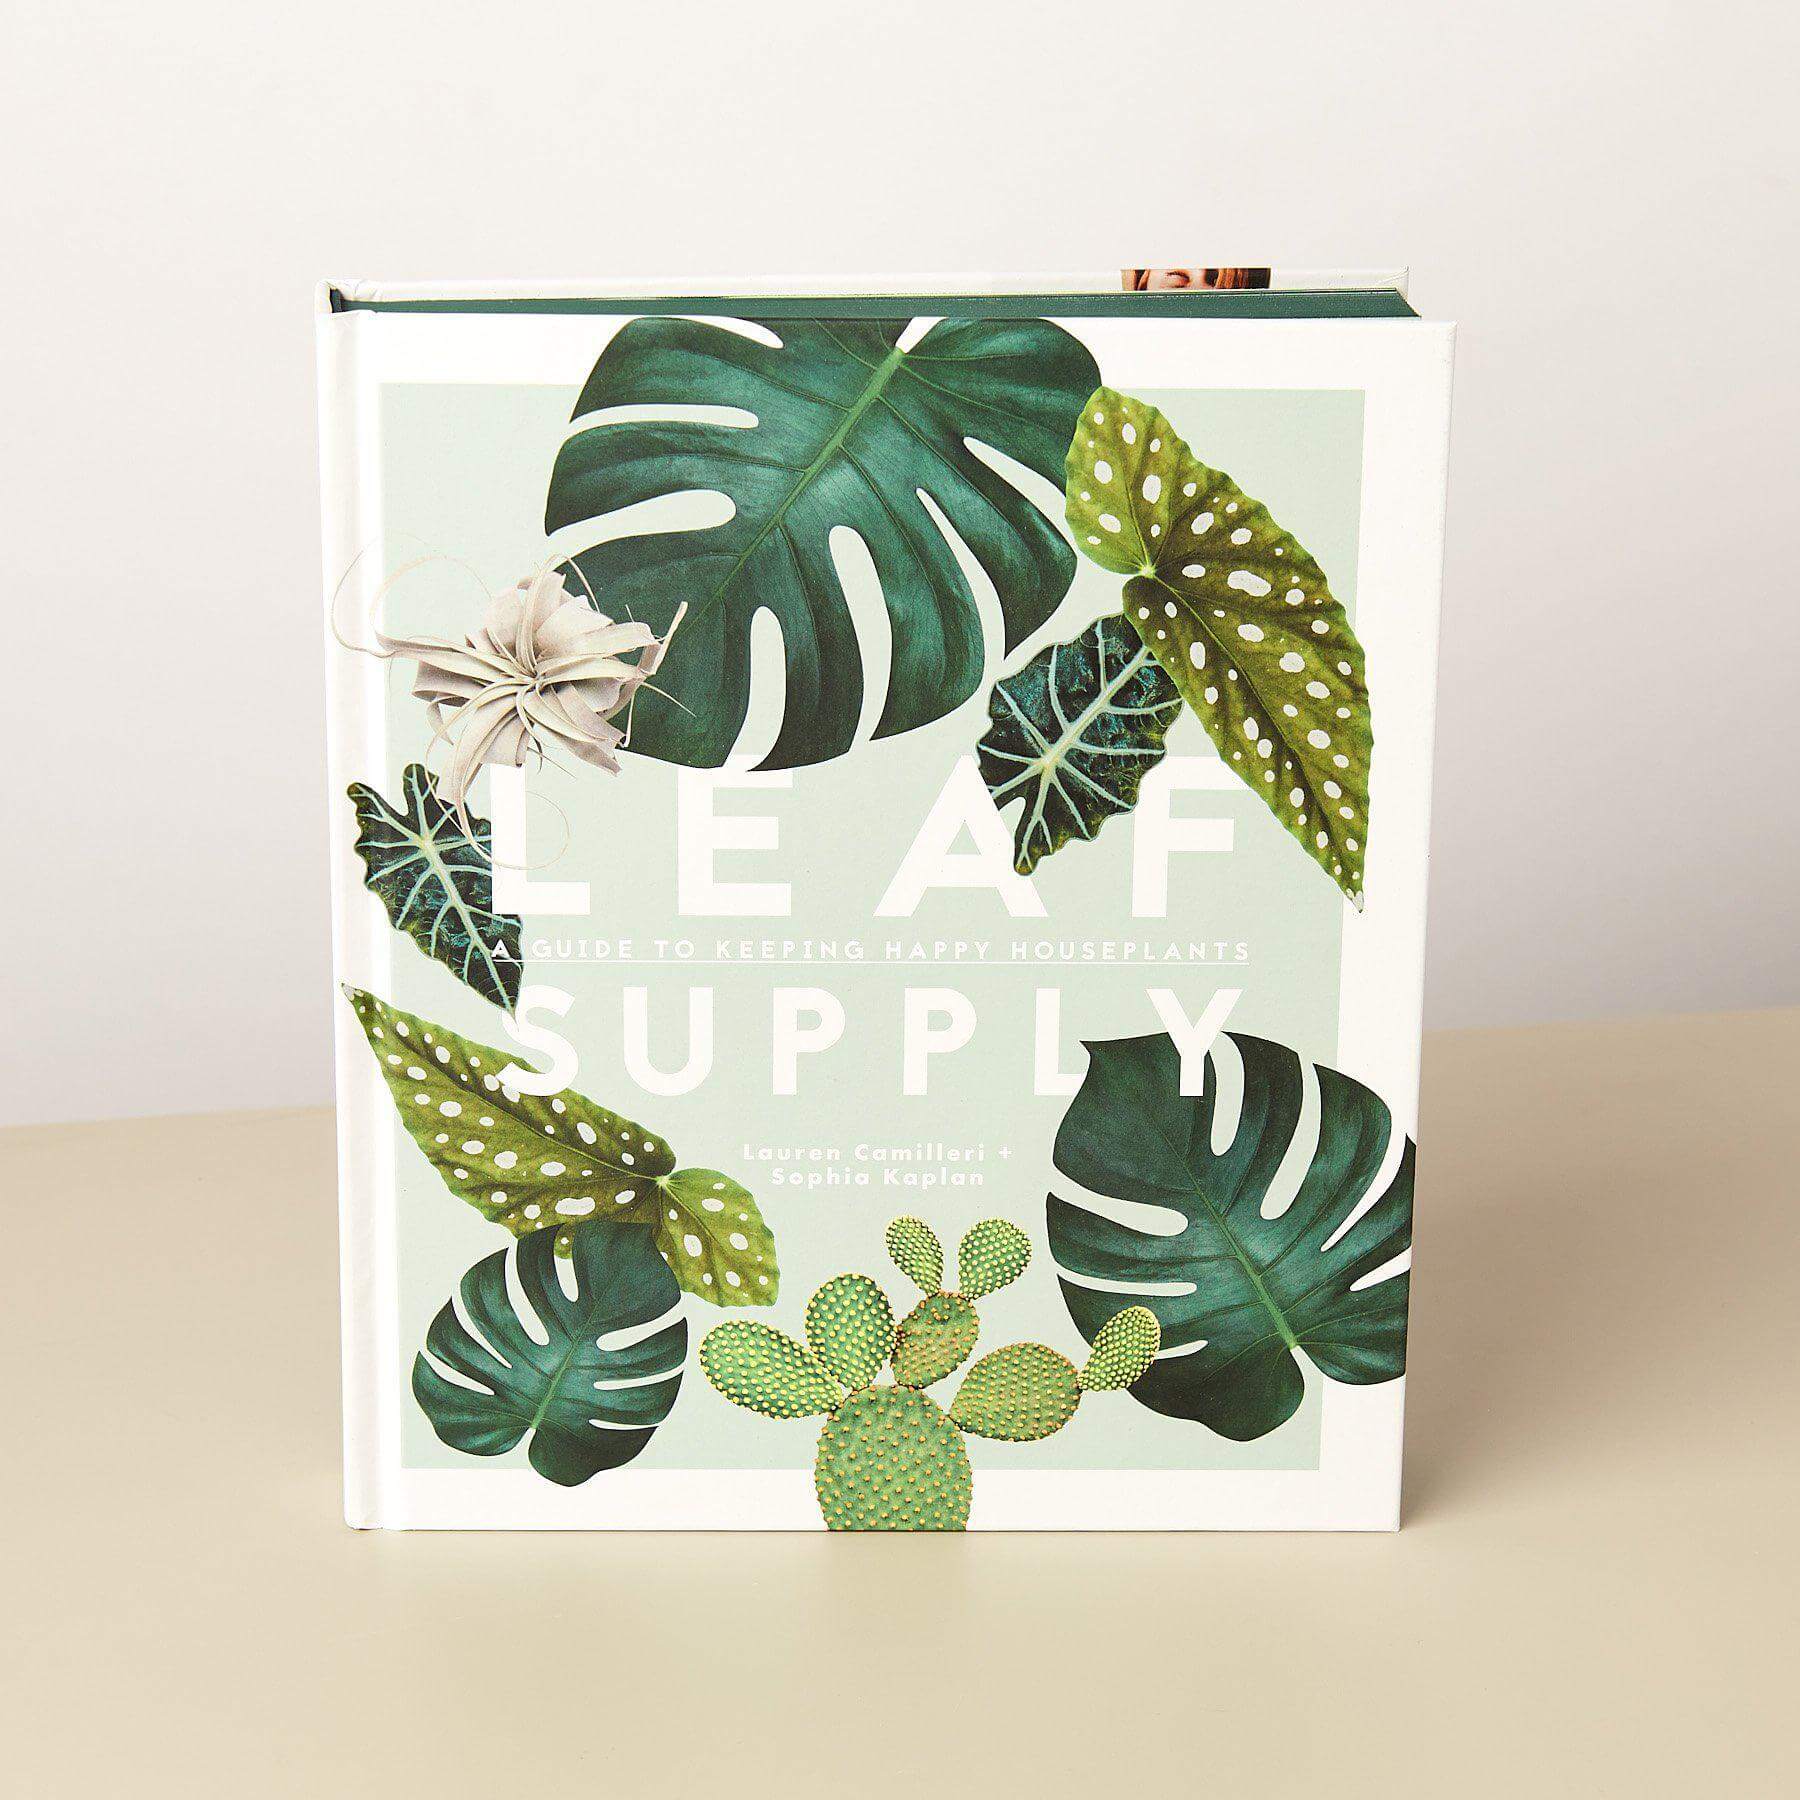 Leaf Supply | Modern house plants that clean the air